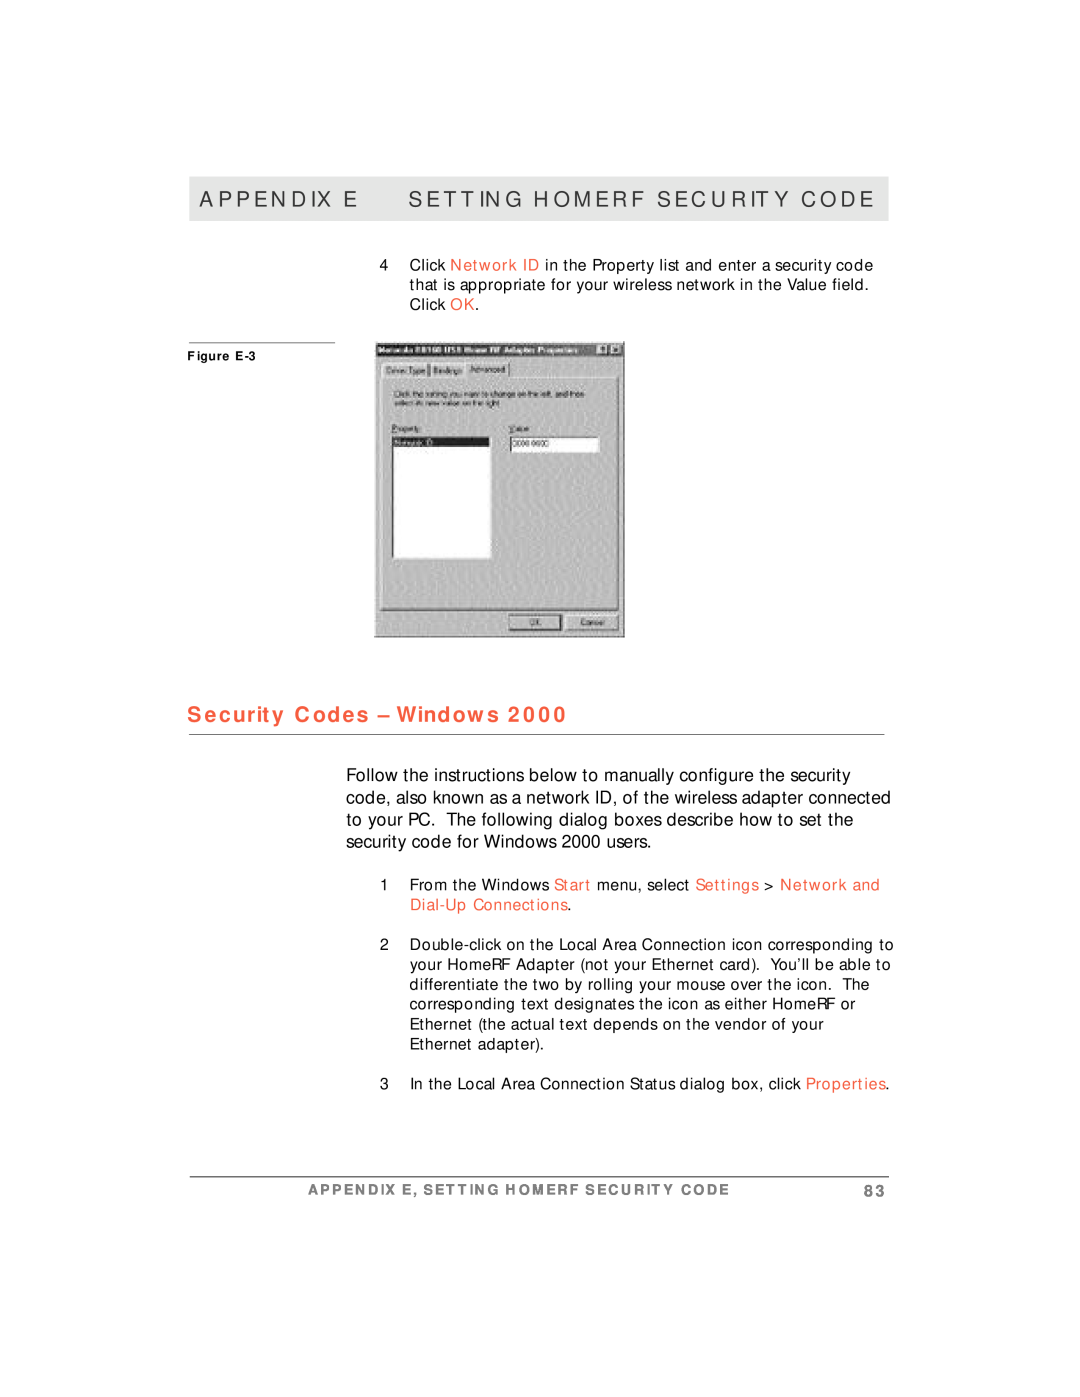 Motorola simplefi manual Security Codes - Windows, Appendix E Setting Homerf Security Code, Figure E-3 